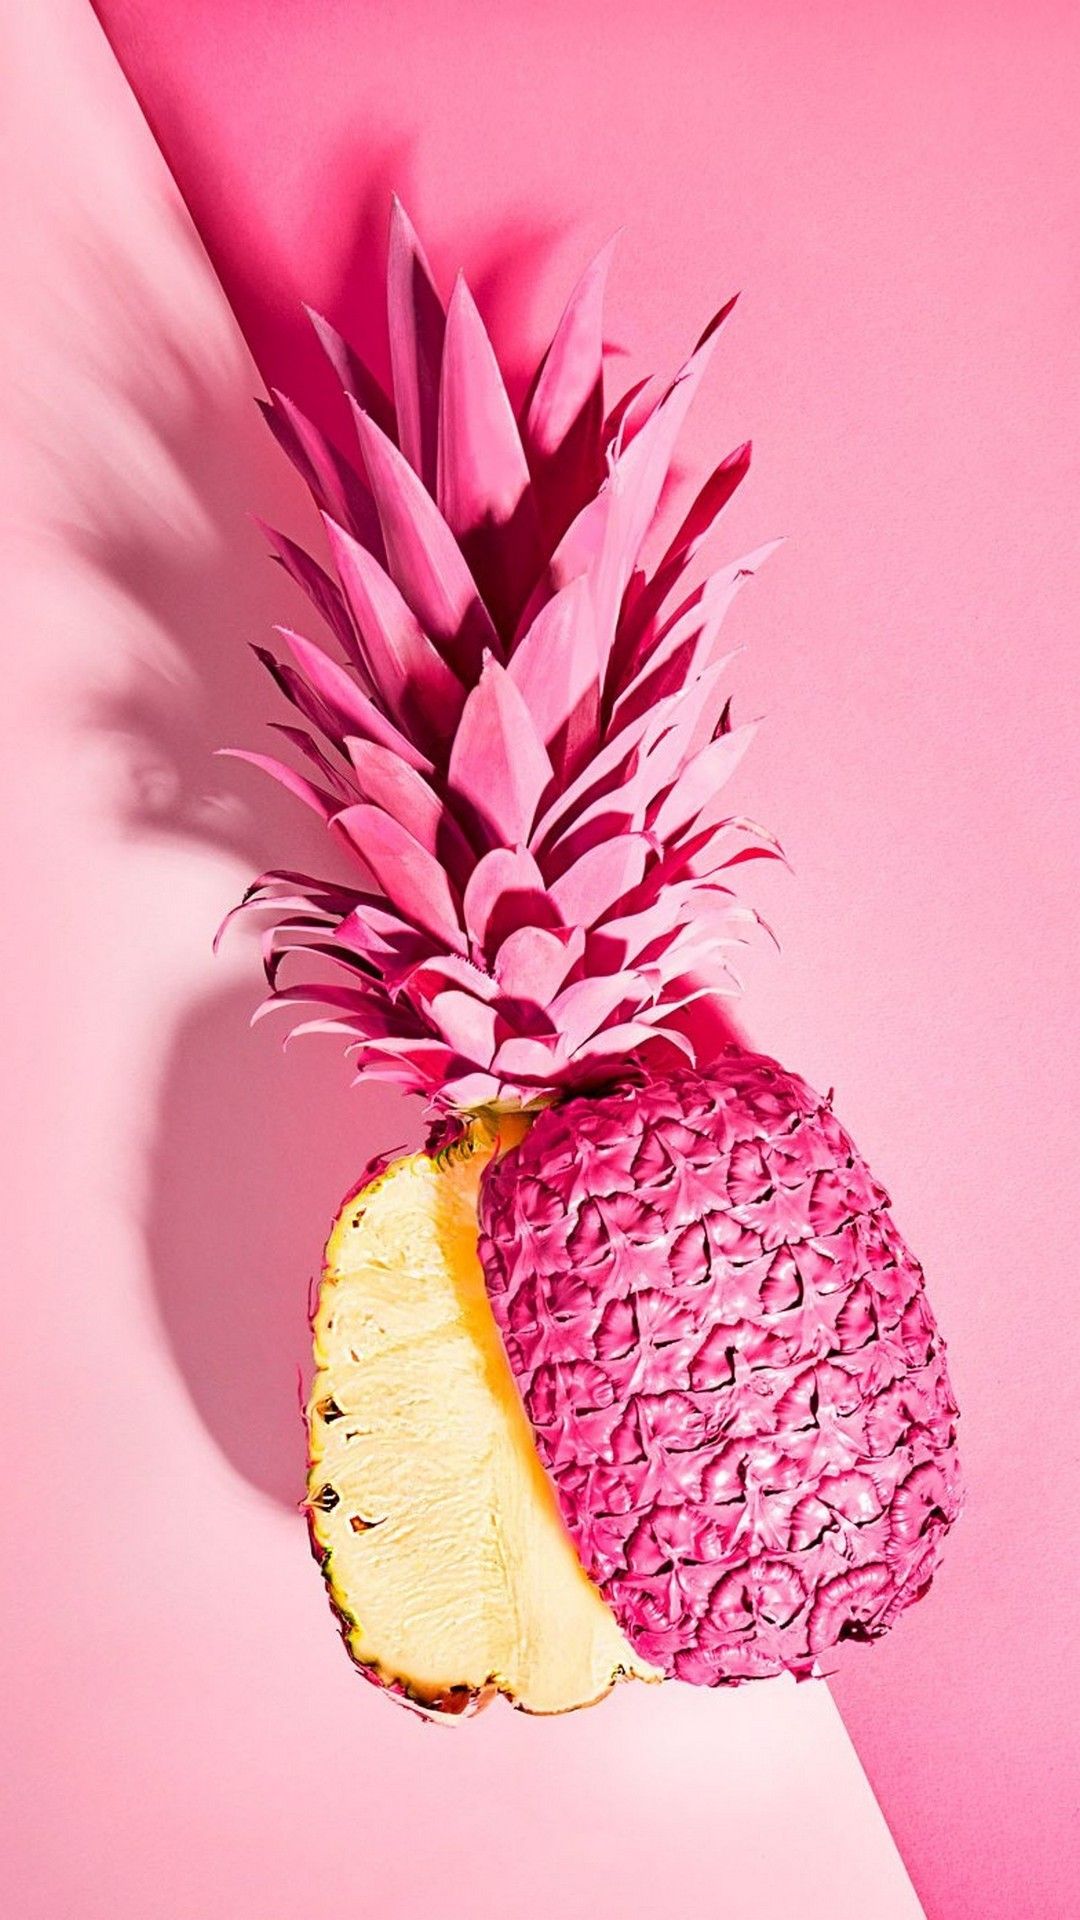 El mejor fondo de pantalla de Pink Pineapple para iPhone - 2019 Android Wallpapers